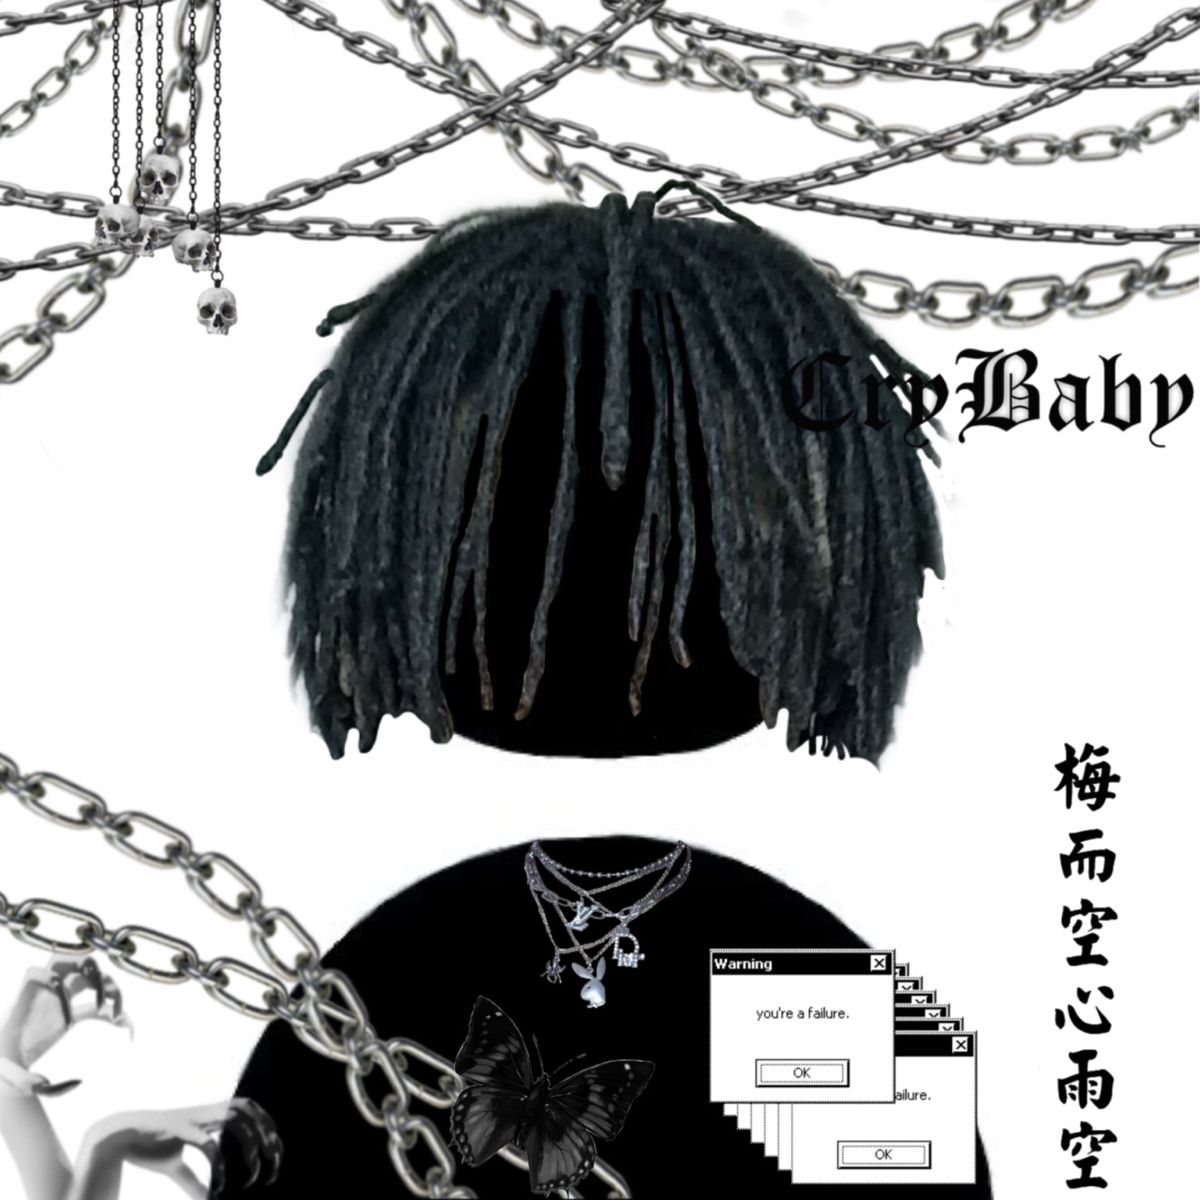 black dread guy icon. Black dreads, Instagram black theme, Icon